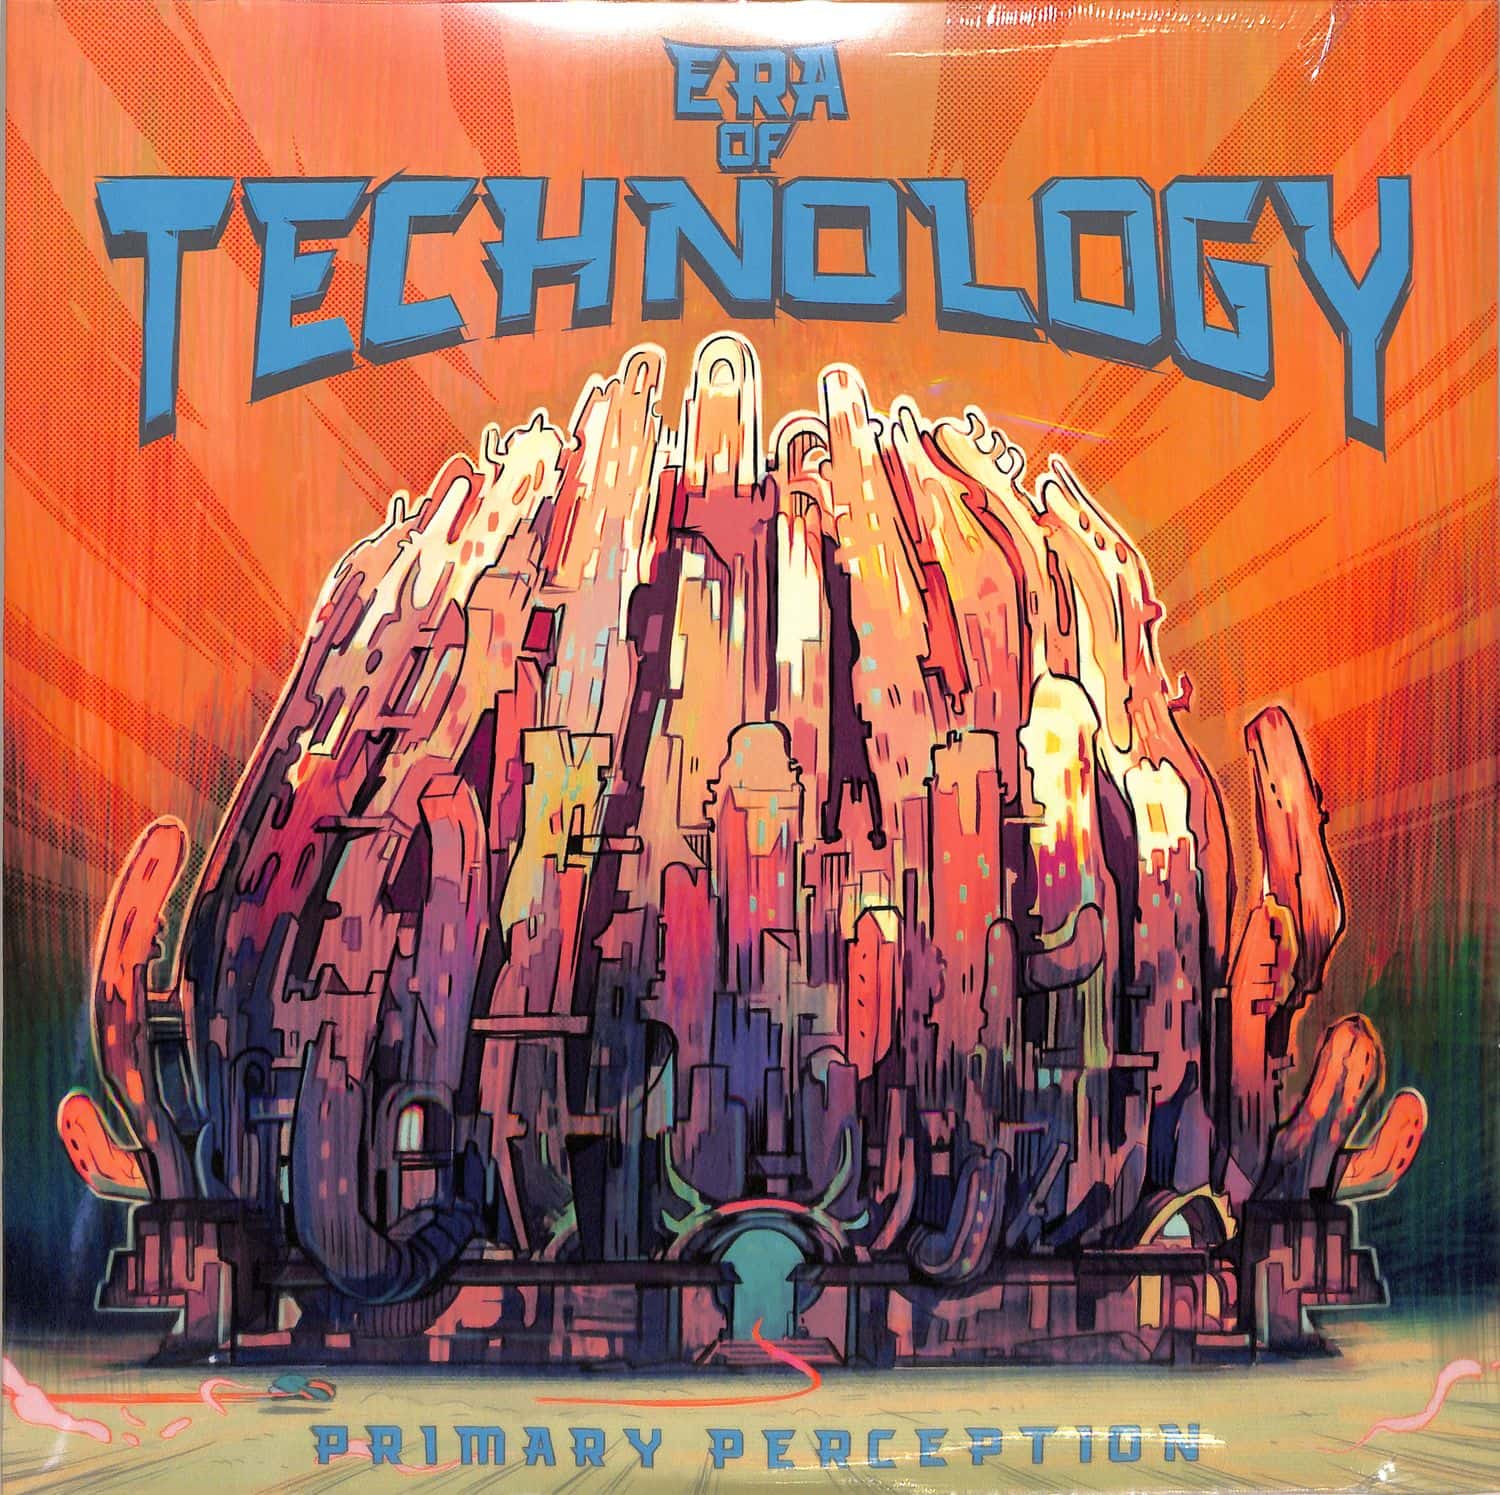 Primary Perception - ERA OF TECHNOLOGY 